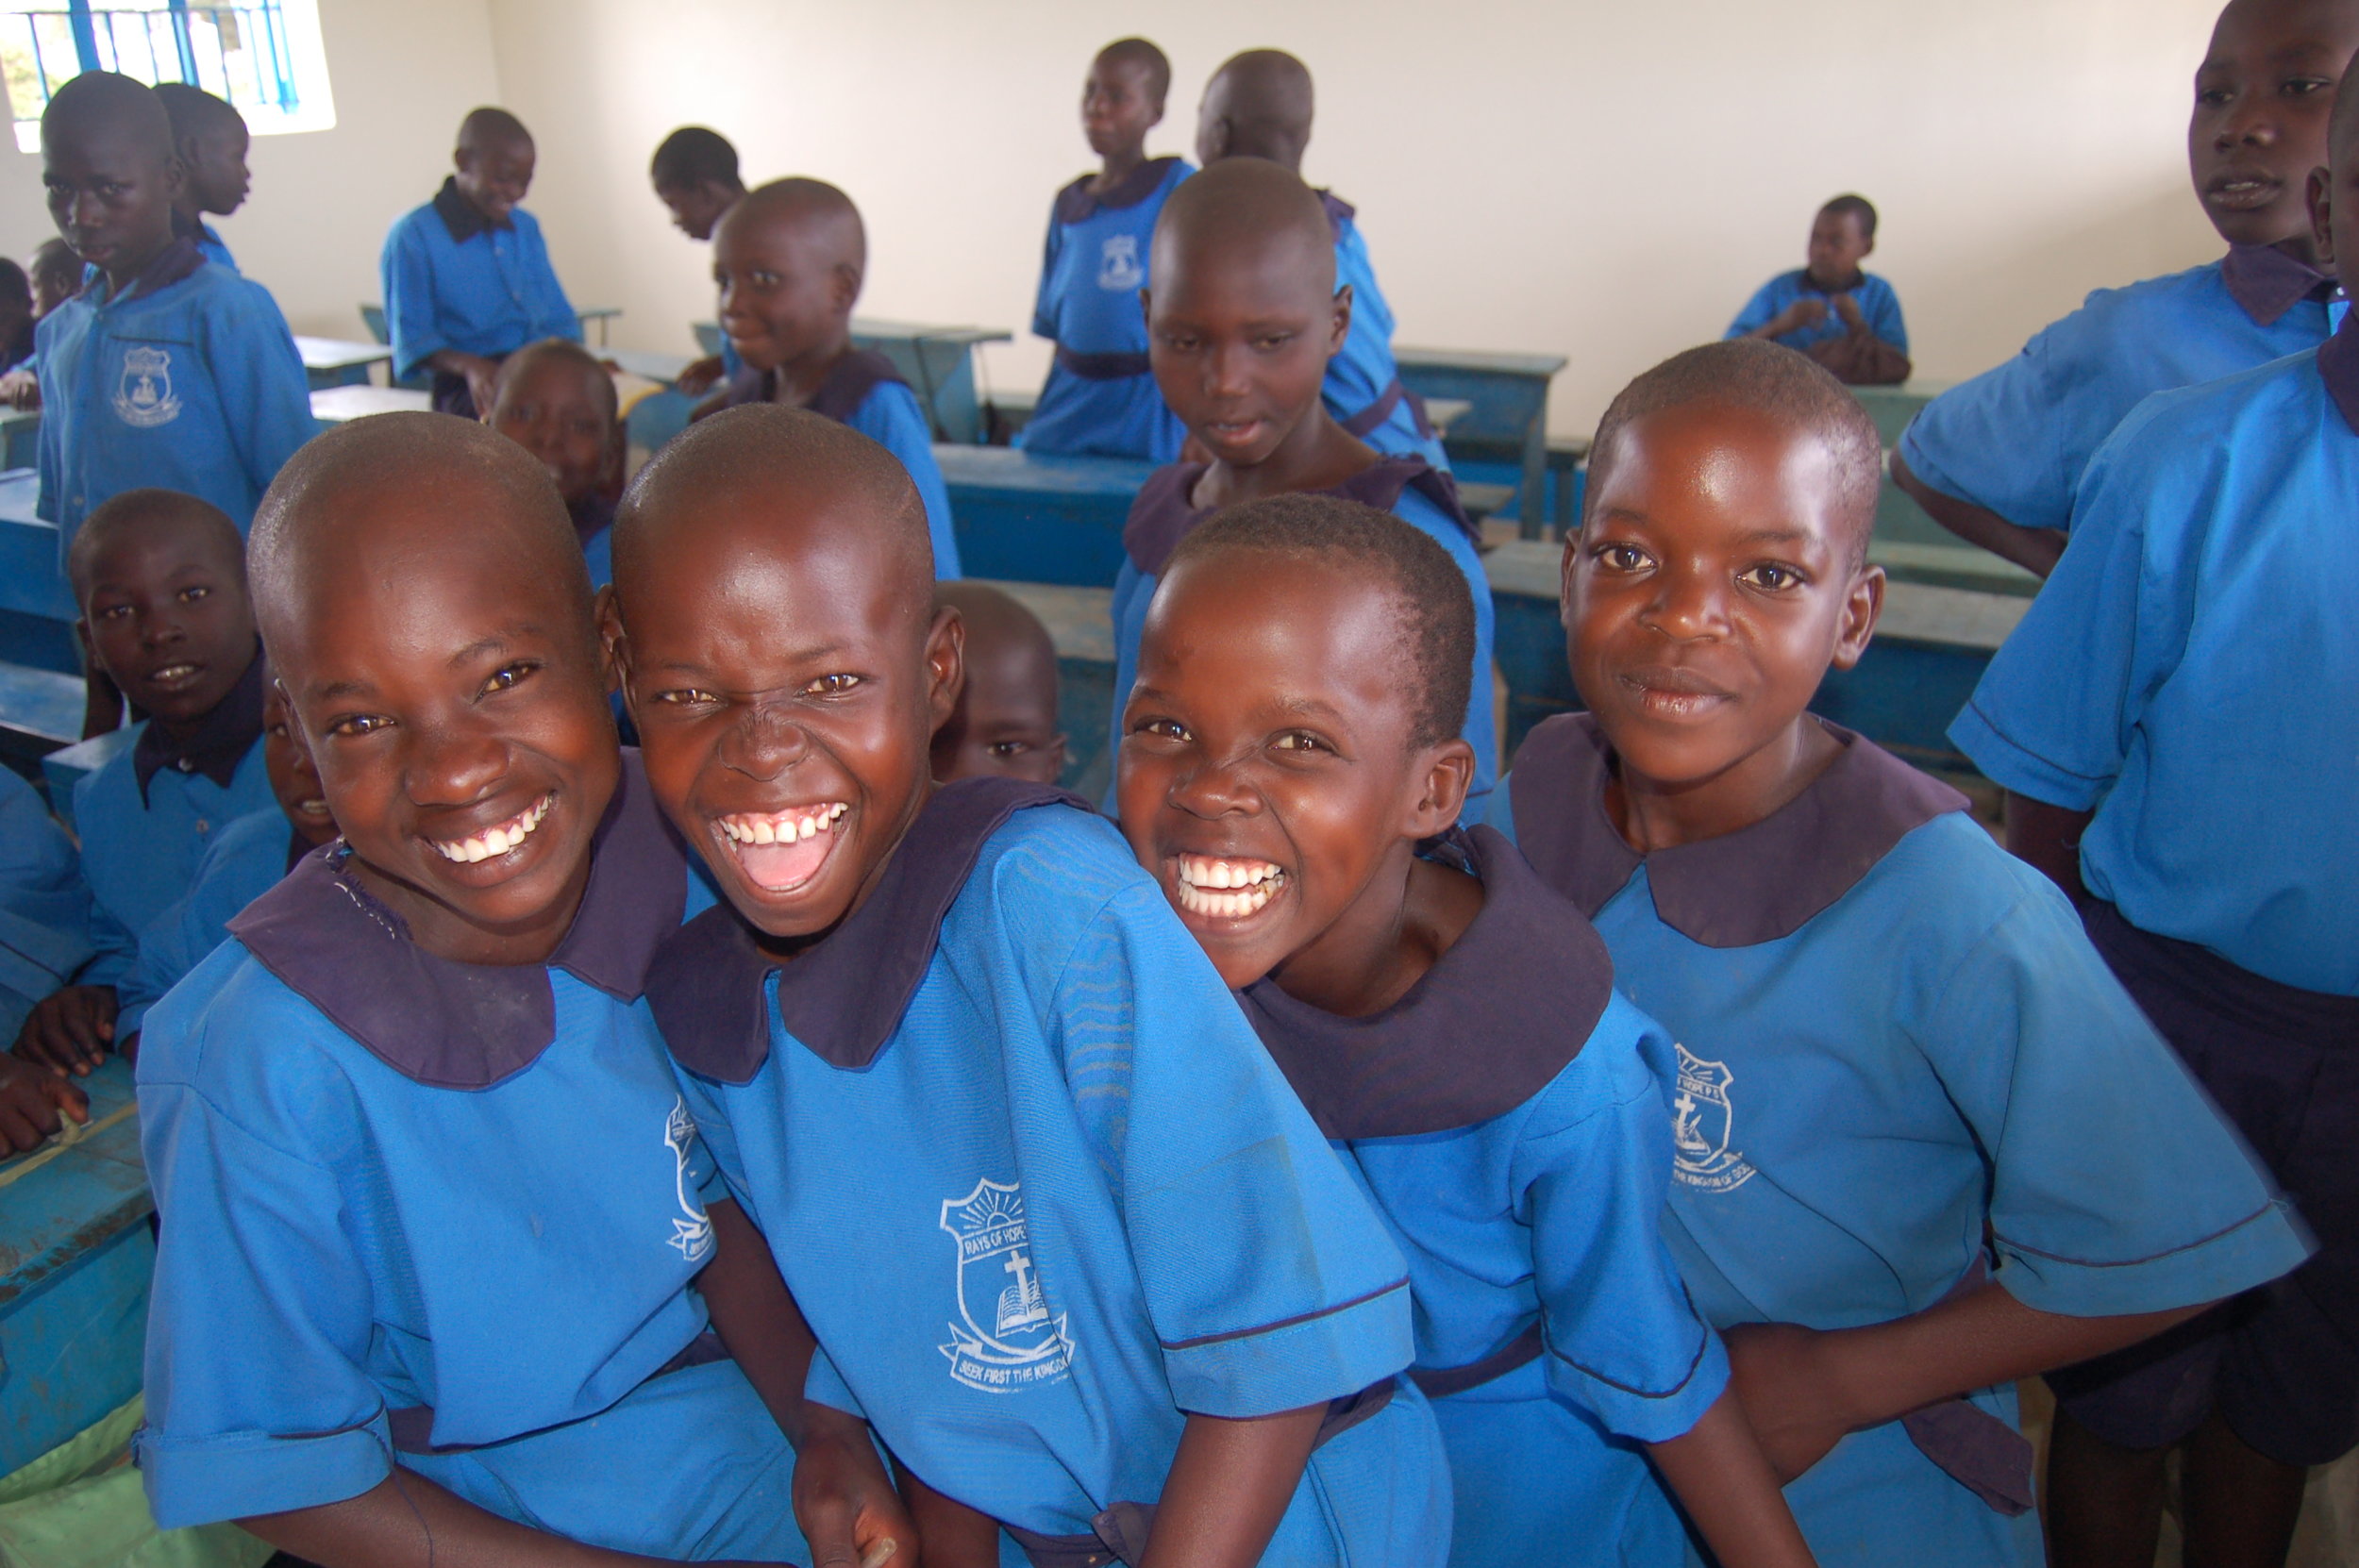 Children in Uniform Laughing.JPG